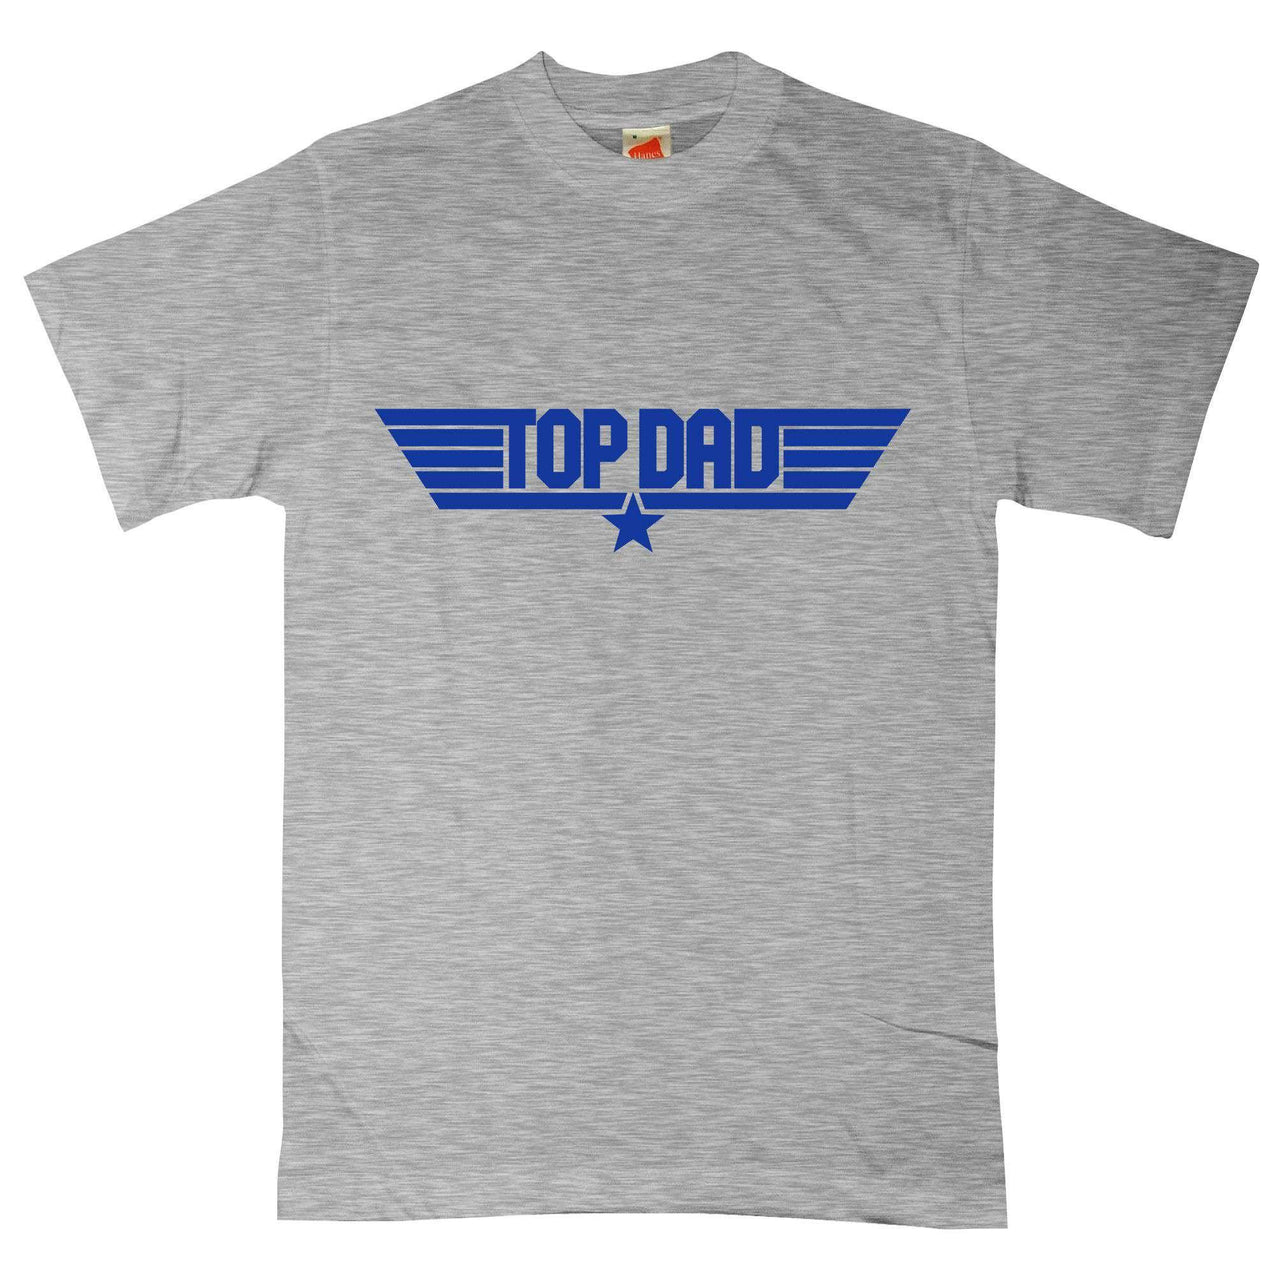 Top Dad Wing Logo T-Shirt For Men 8Ball